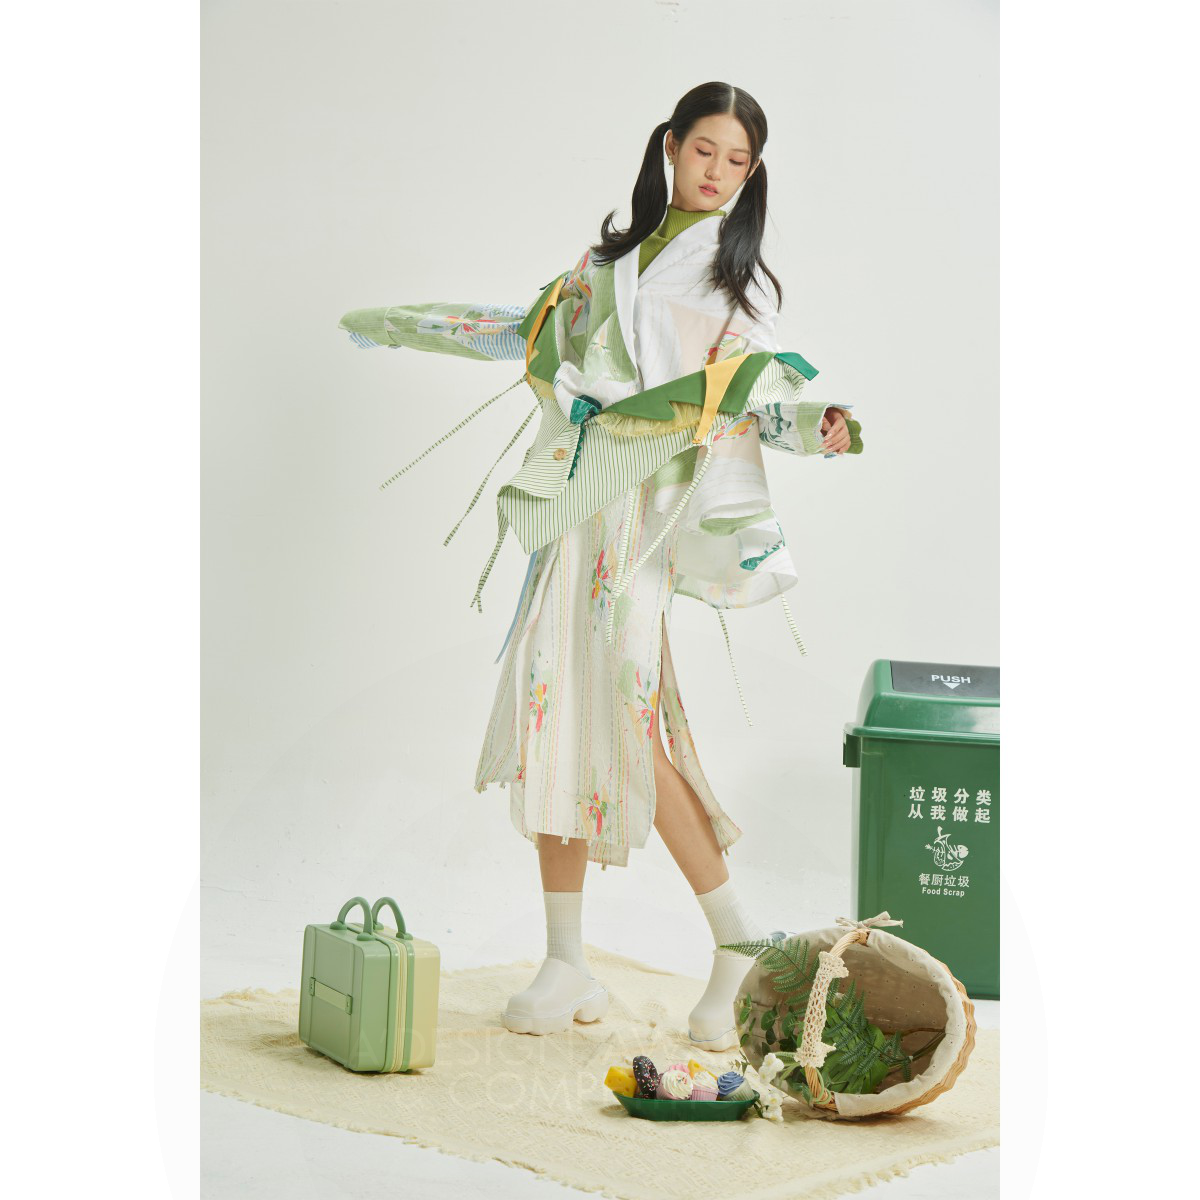 Huili Jin wins Iron at the prestigious A' Fashion, Apparel and Garment Design Award with Escape Work Detachment Garment.